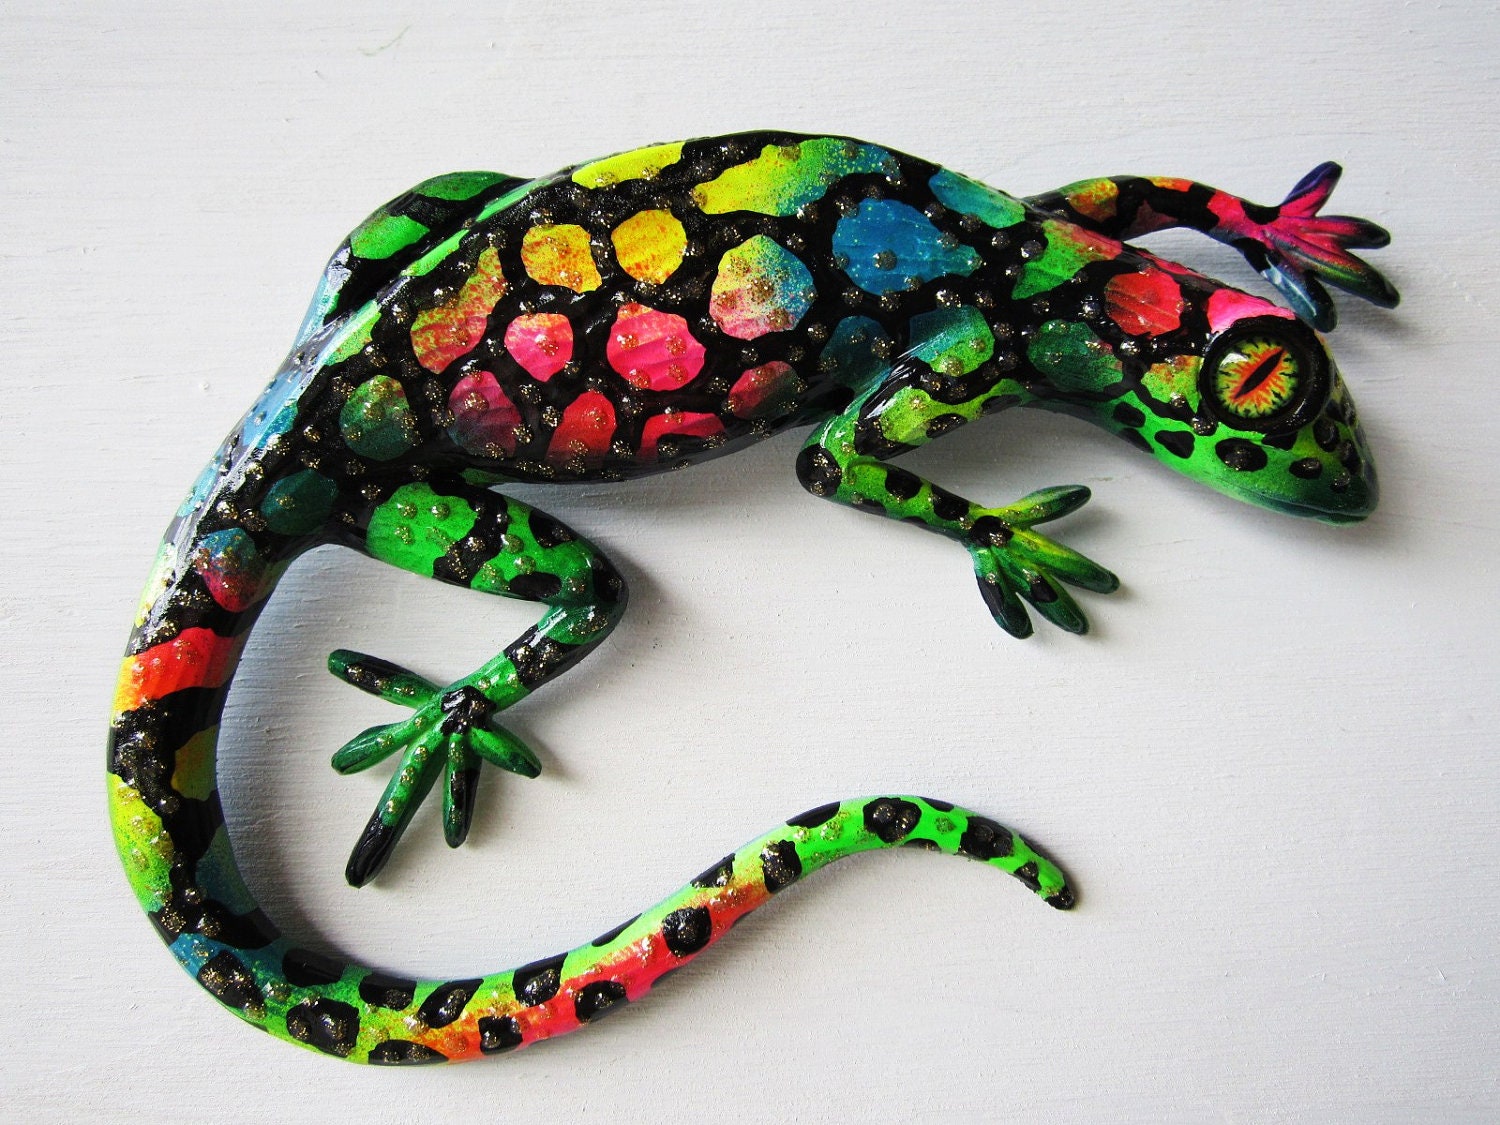  Reptile art  wall decor whimsical lizard sculpture